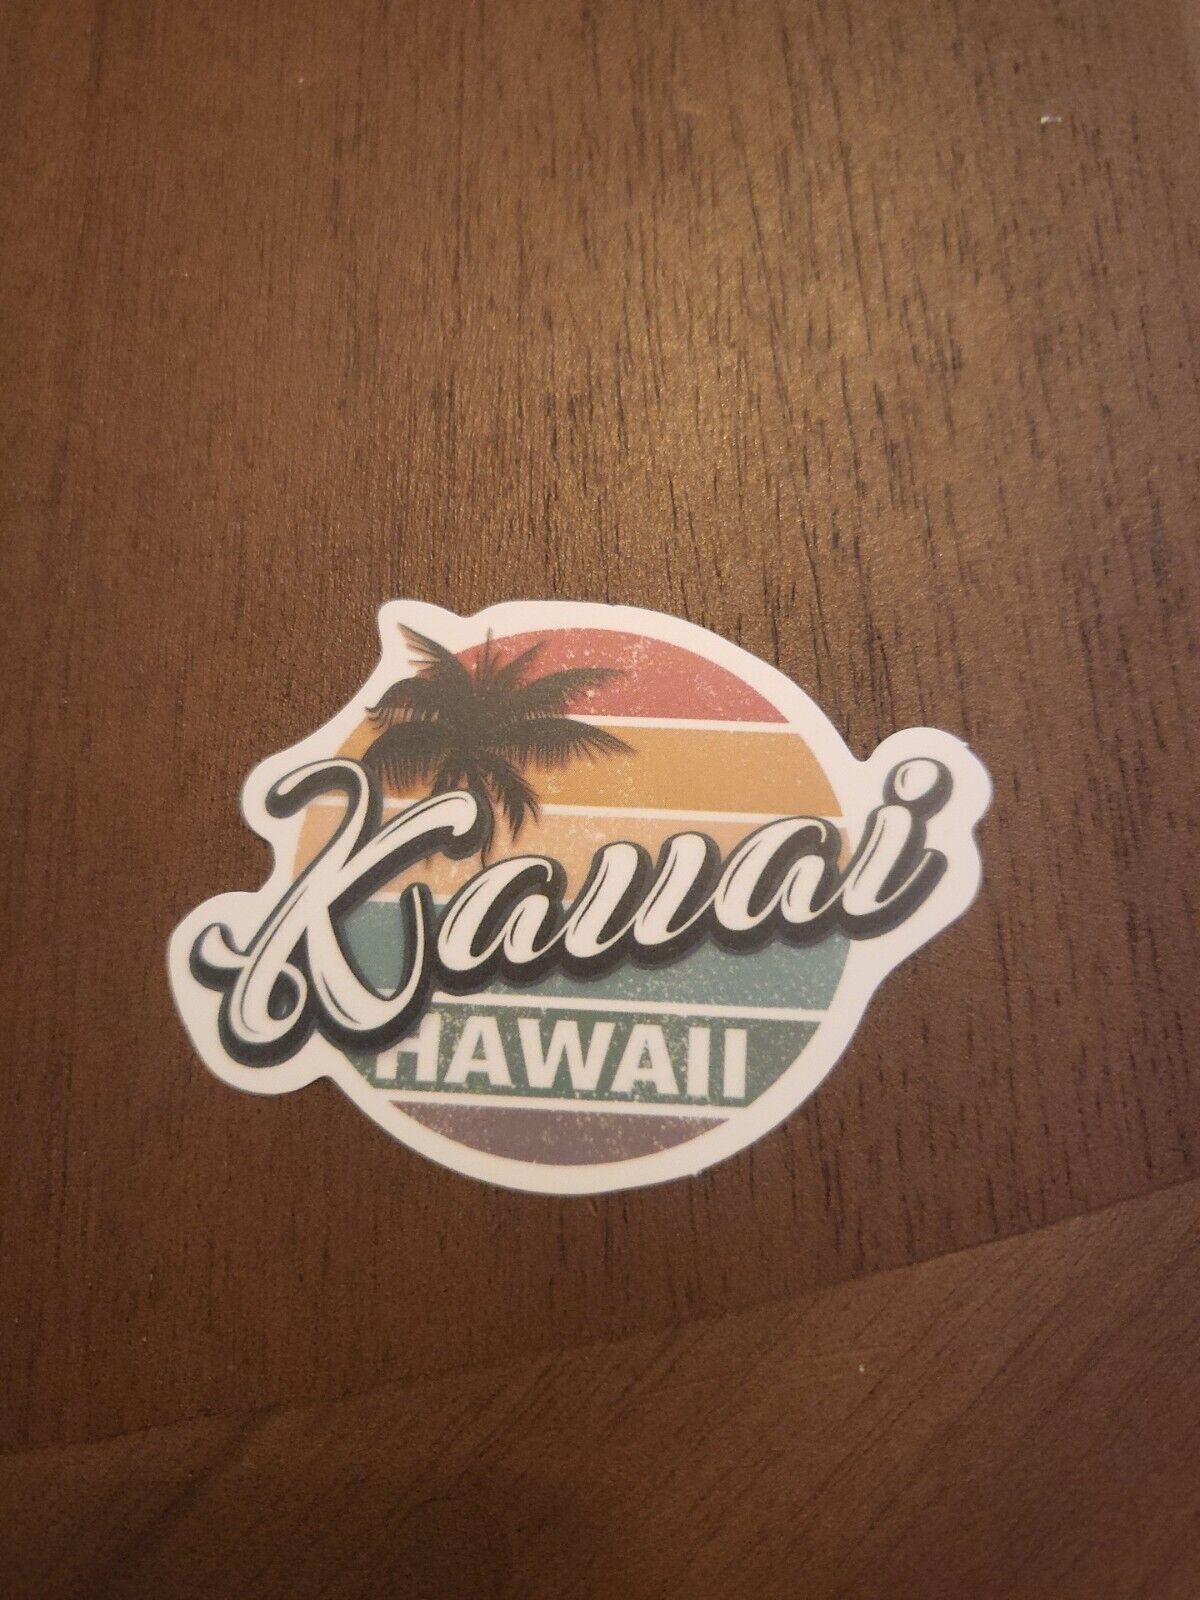 Kauai Hawaii Sticker Decal